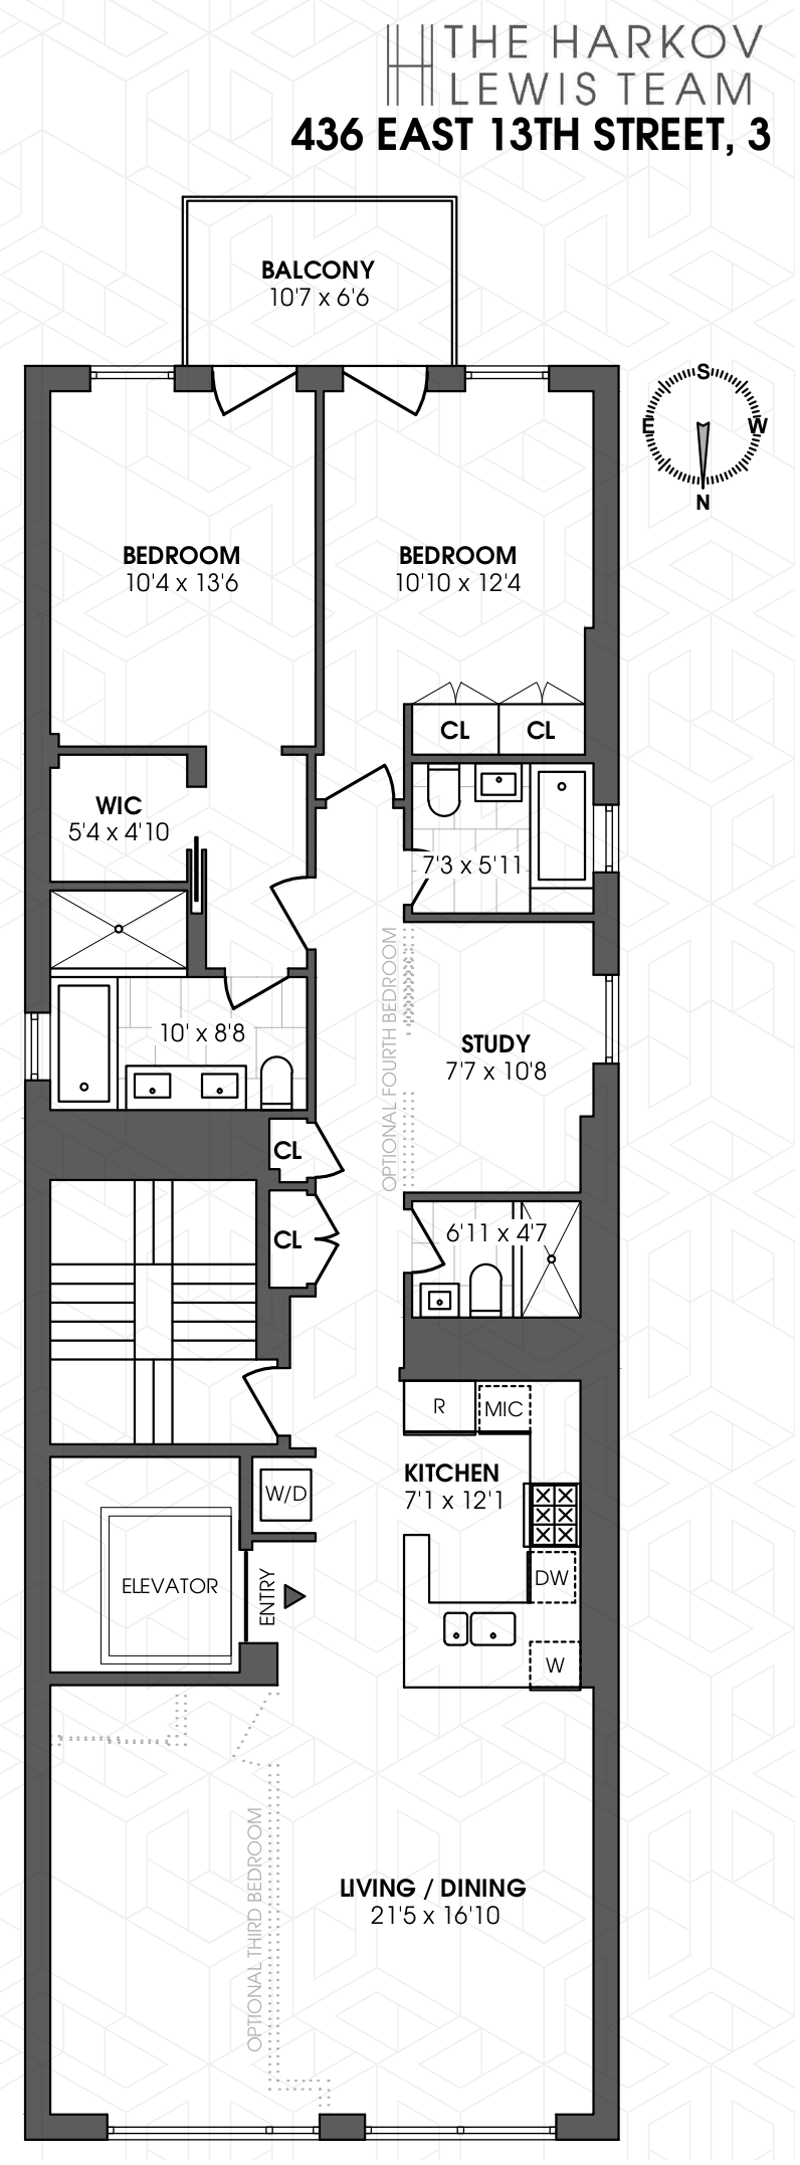 Floorplan for 436 East 13th Street, 3